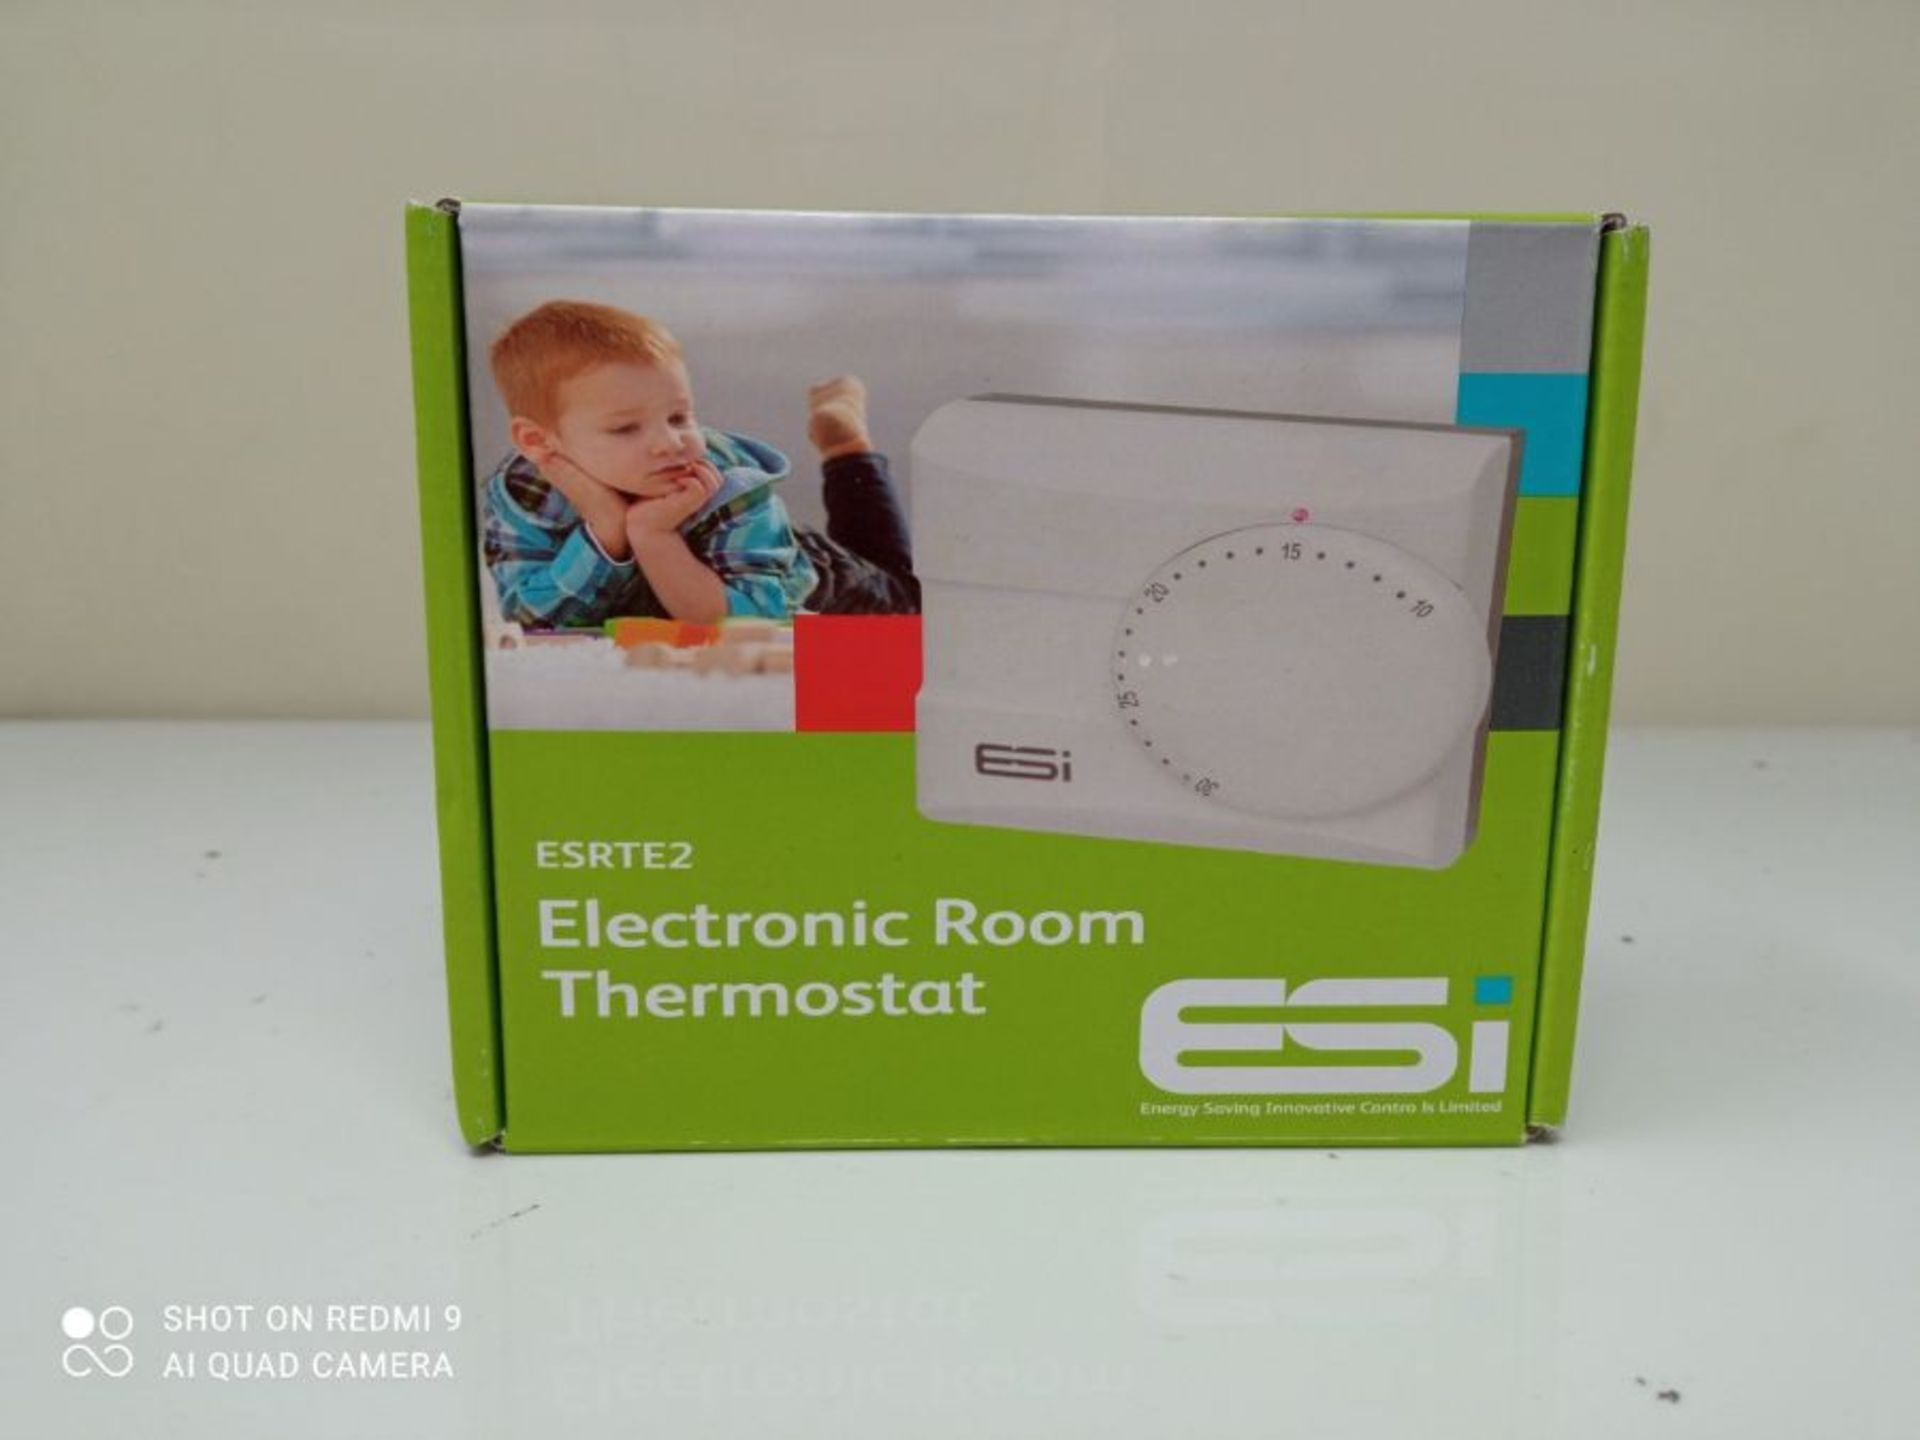 ESI - Energy Saving Innovation Controls ESRTE2 Electronic Room Thermostat - Image 2 of 3